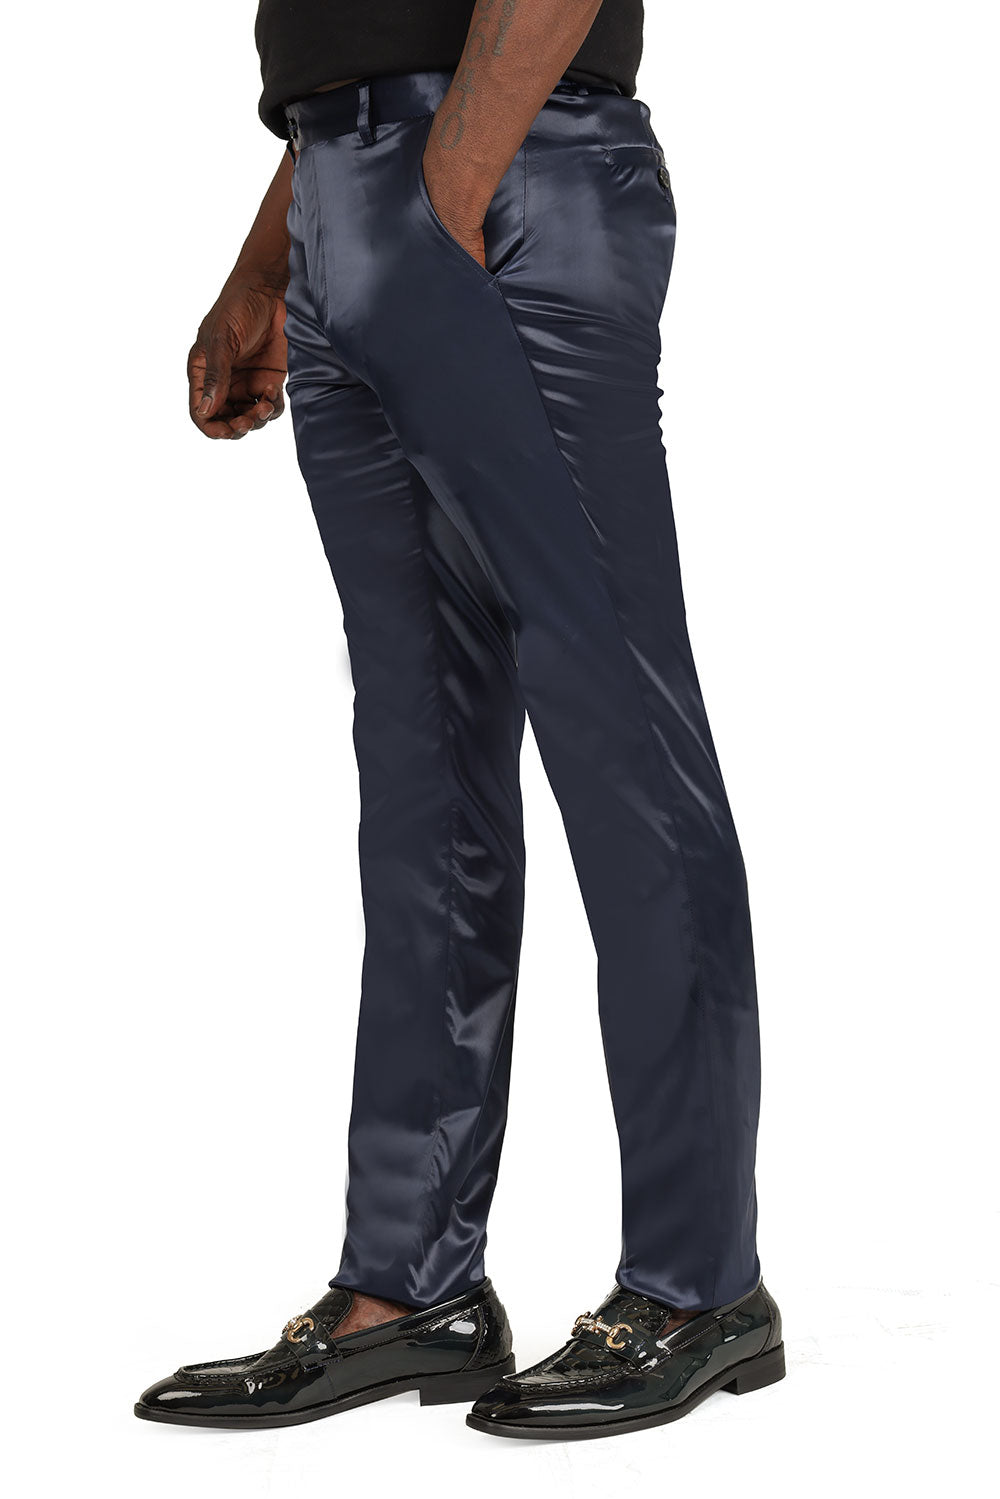 BARABAS Men's Solid Color Shiny Chino Pants VP1010 Navy